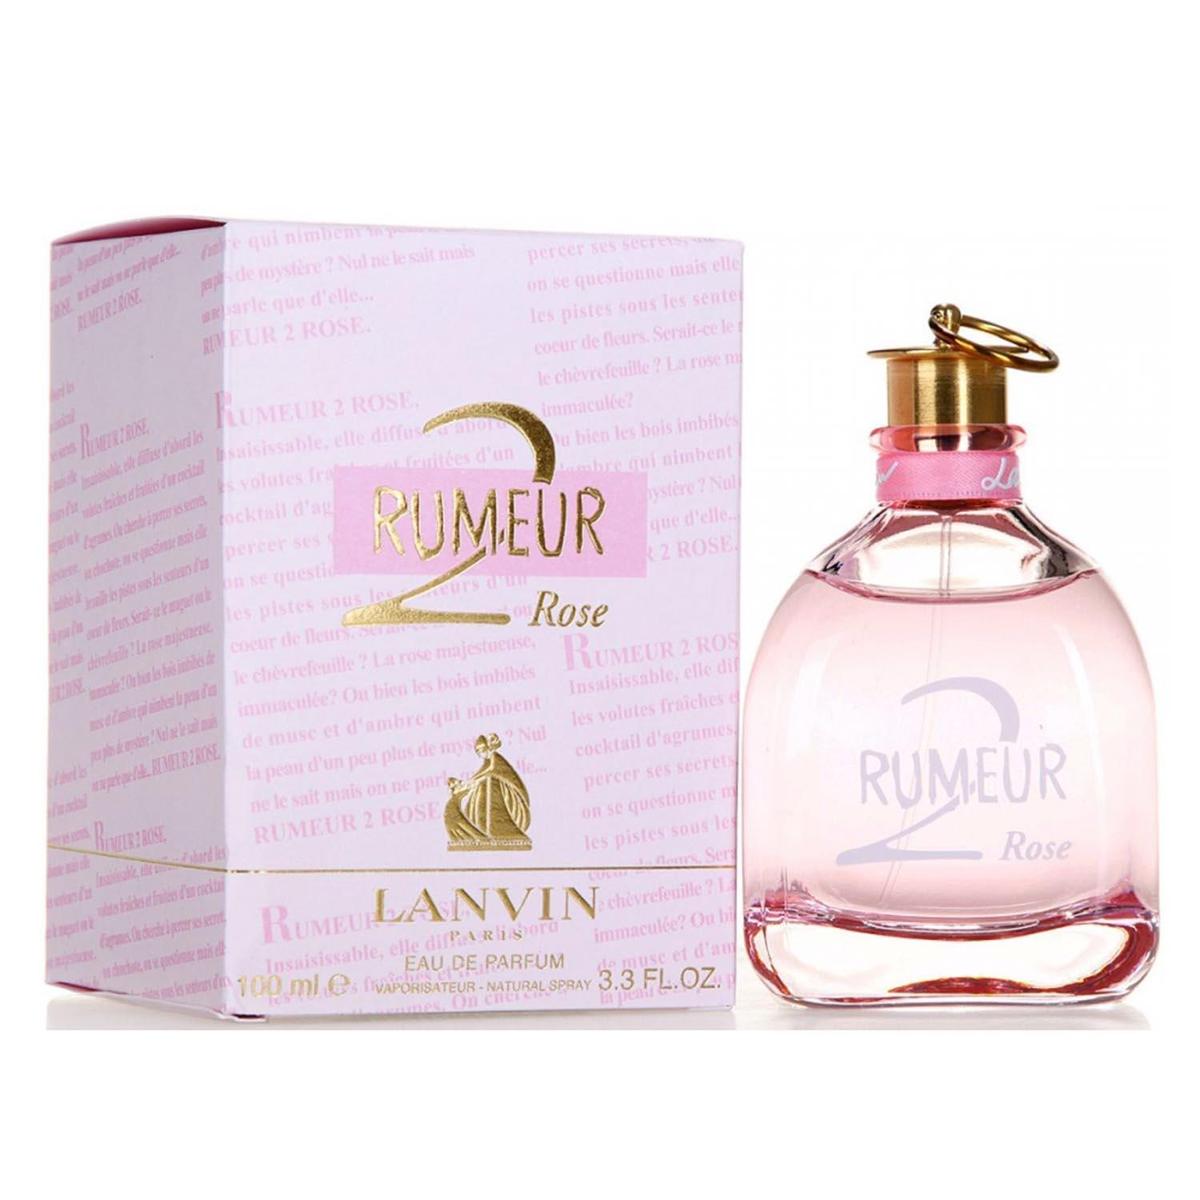 Rumeur 2 Rose Eau de Parfum 100ml